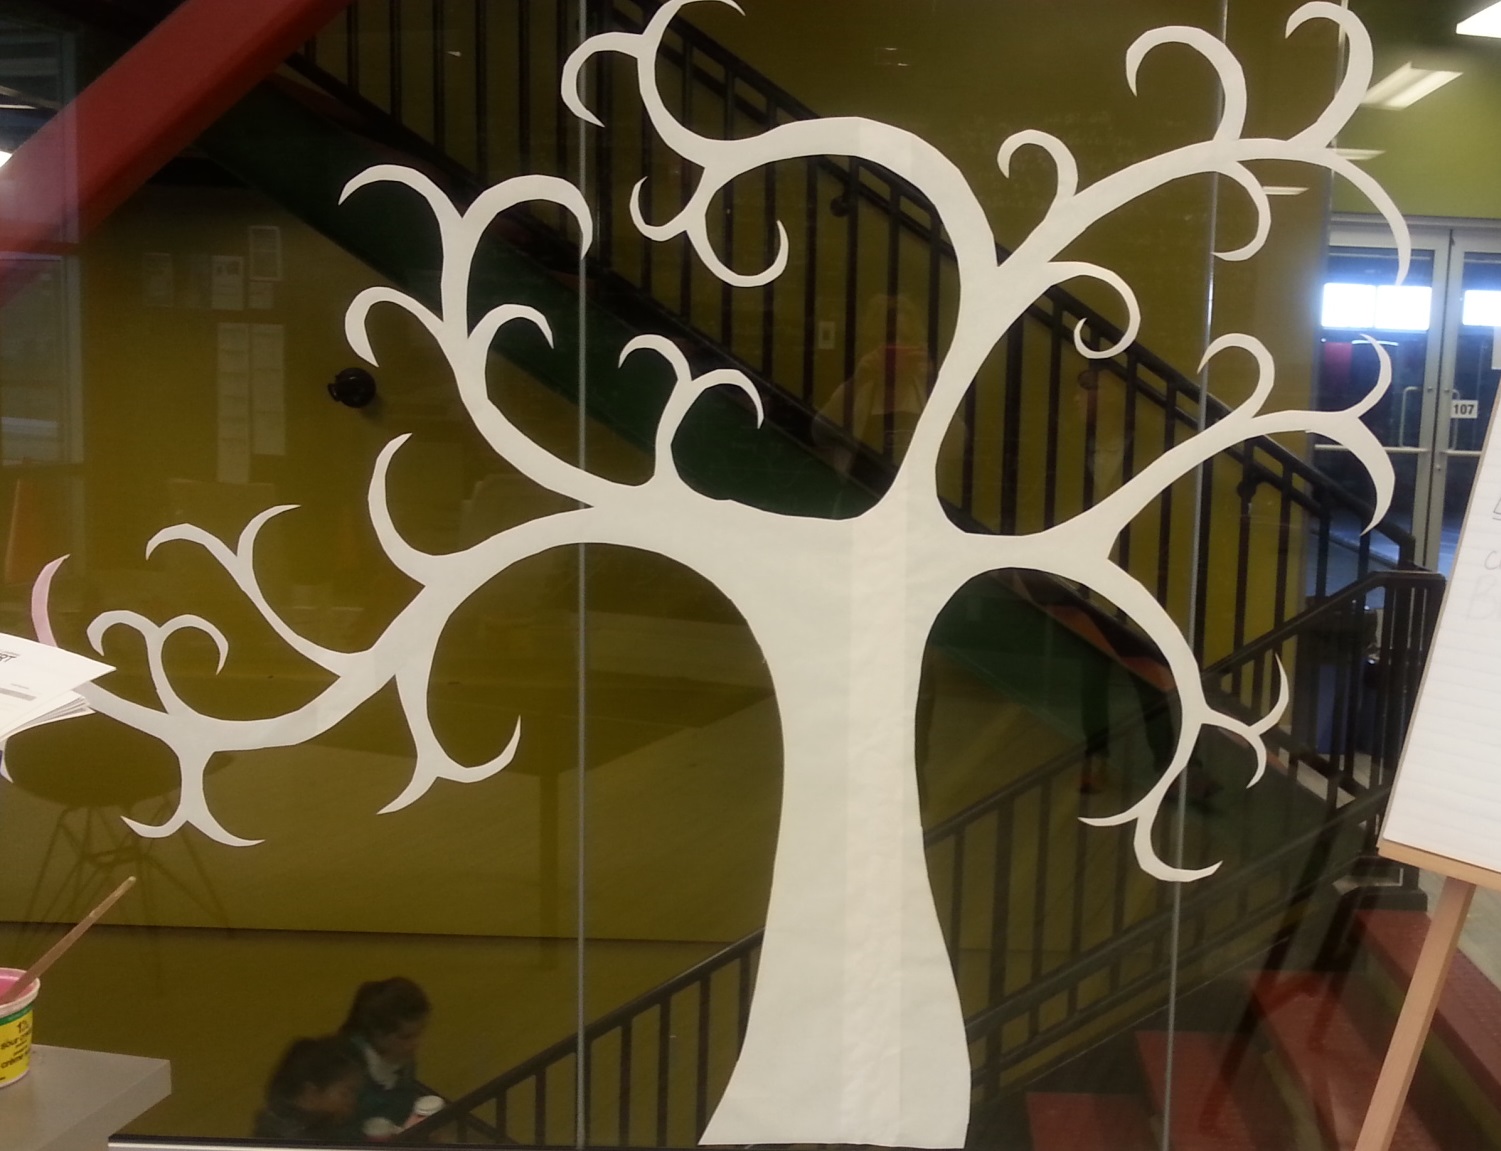 a faithful attempt: Canada 150 Whole School Maple Leaf & Tree Display